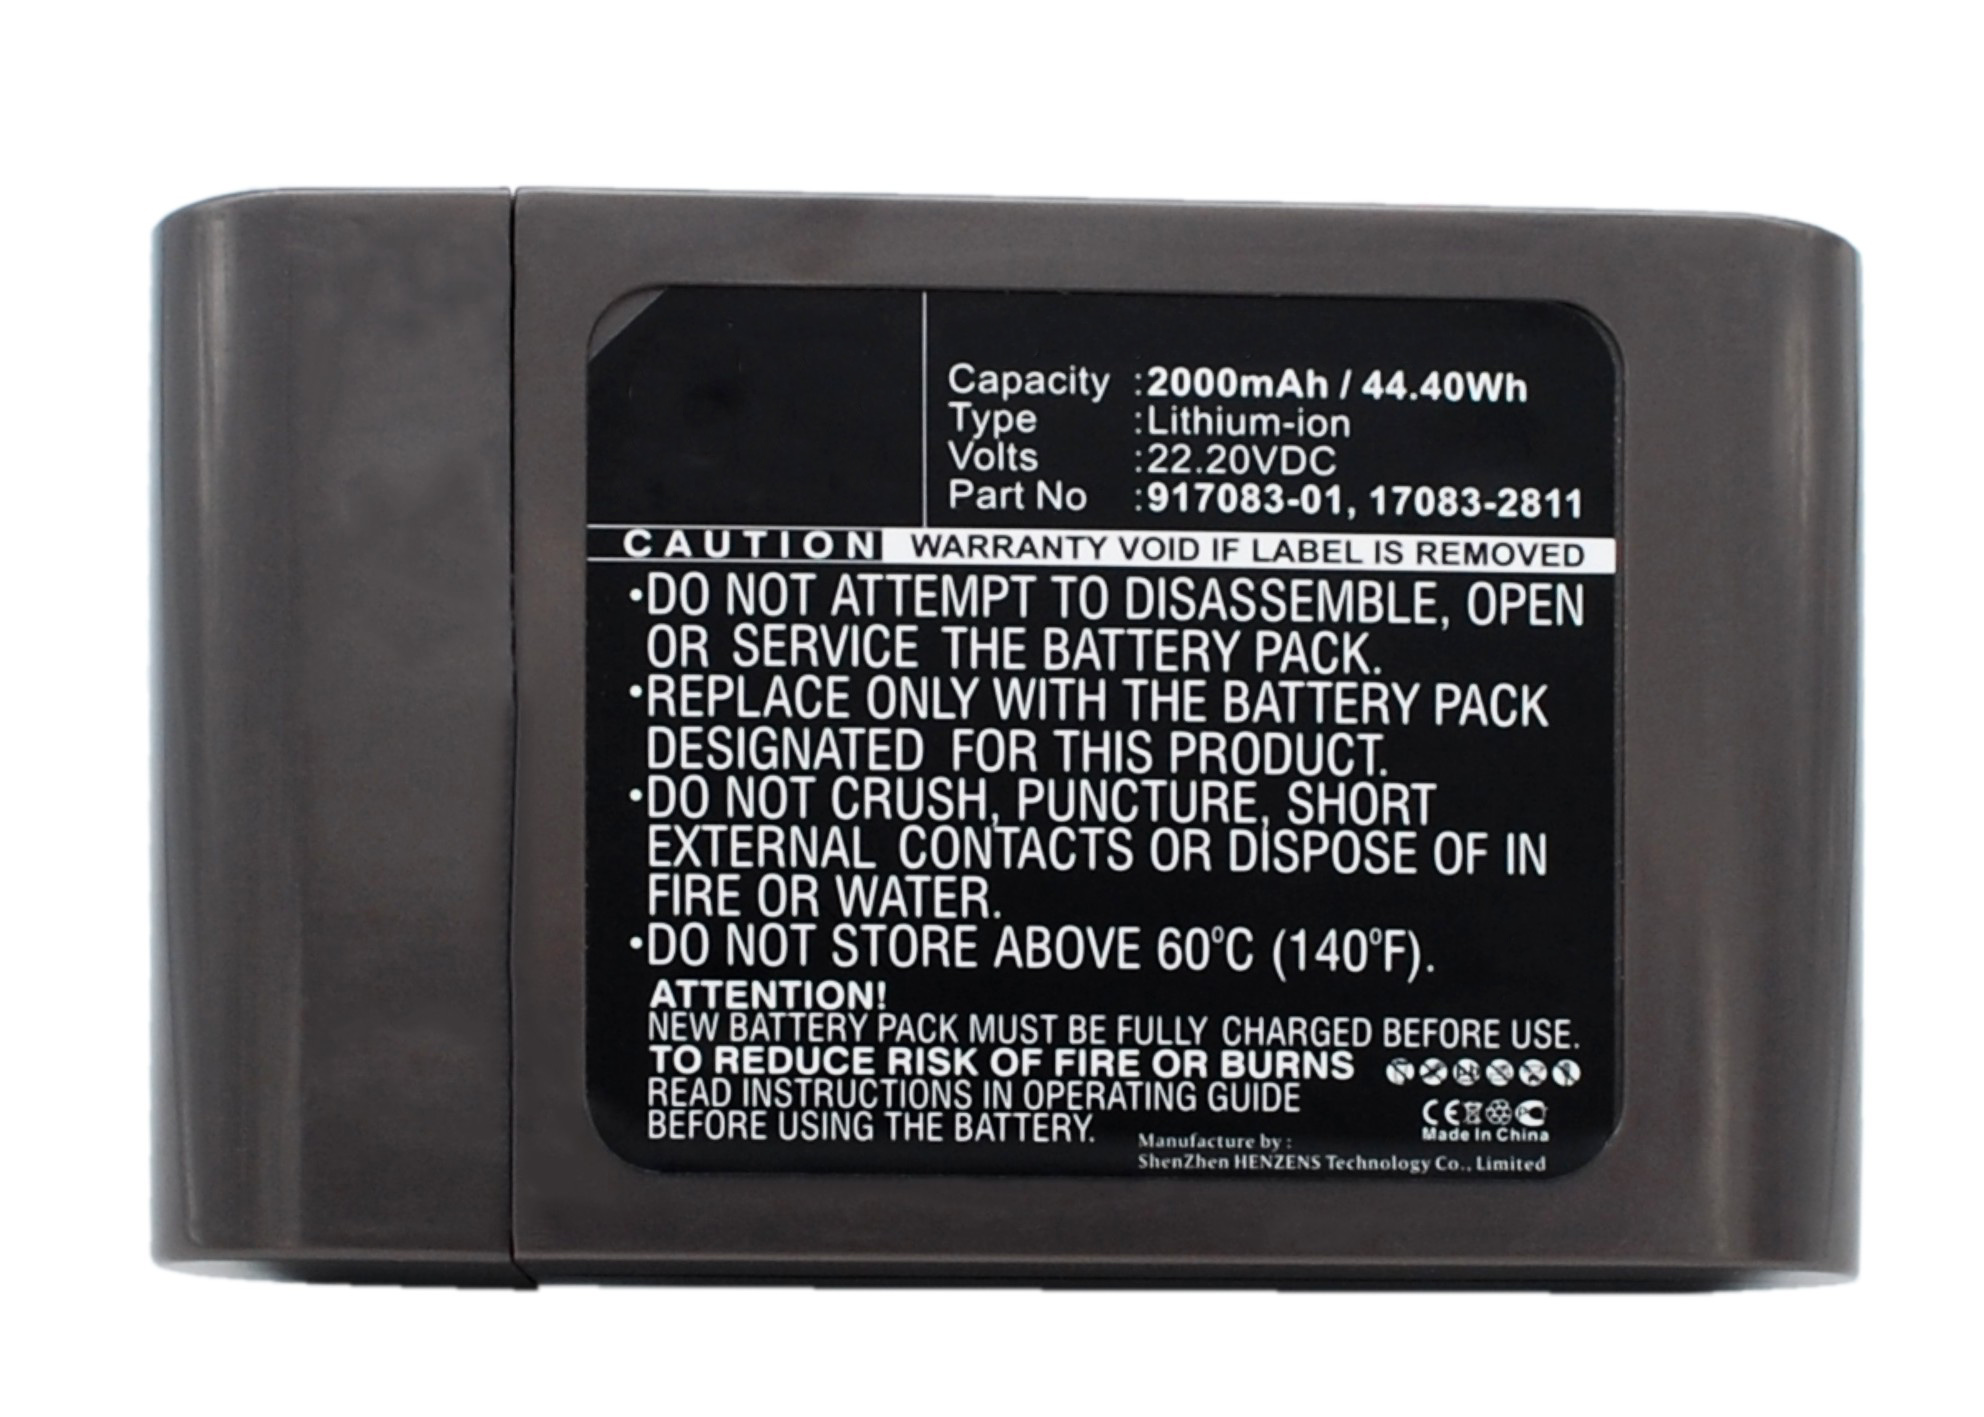 Synergy Digital Vacuum Cleaner Battery, Compatible with Dyson 17083-2811 Vacuum Cleaner Battery (Li-ion, 22.2V, 2000mAh)